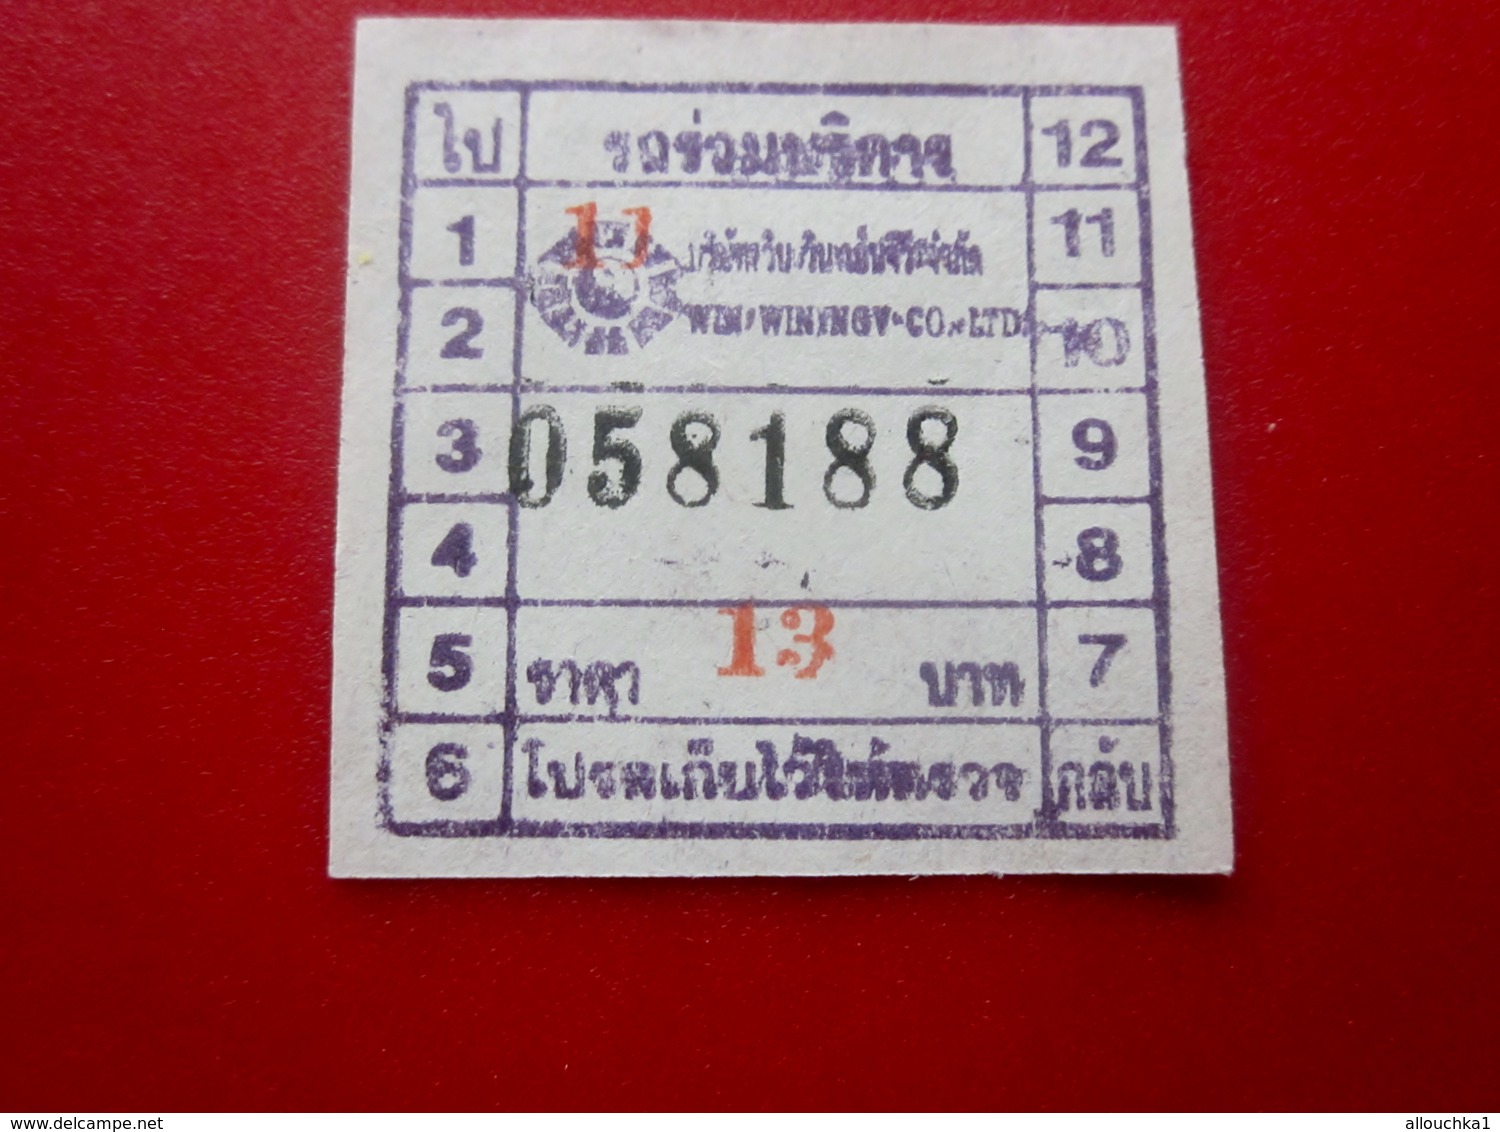 THAILAND THAILANDE -Boleto De Tren -Titre De Transport Billet Ticket-Tramway,Bus,Autobus,Railway,Métro - Monde